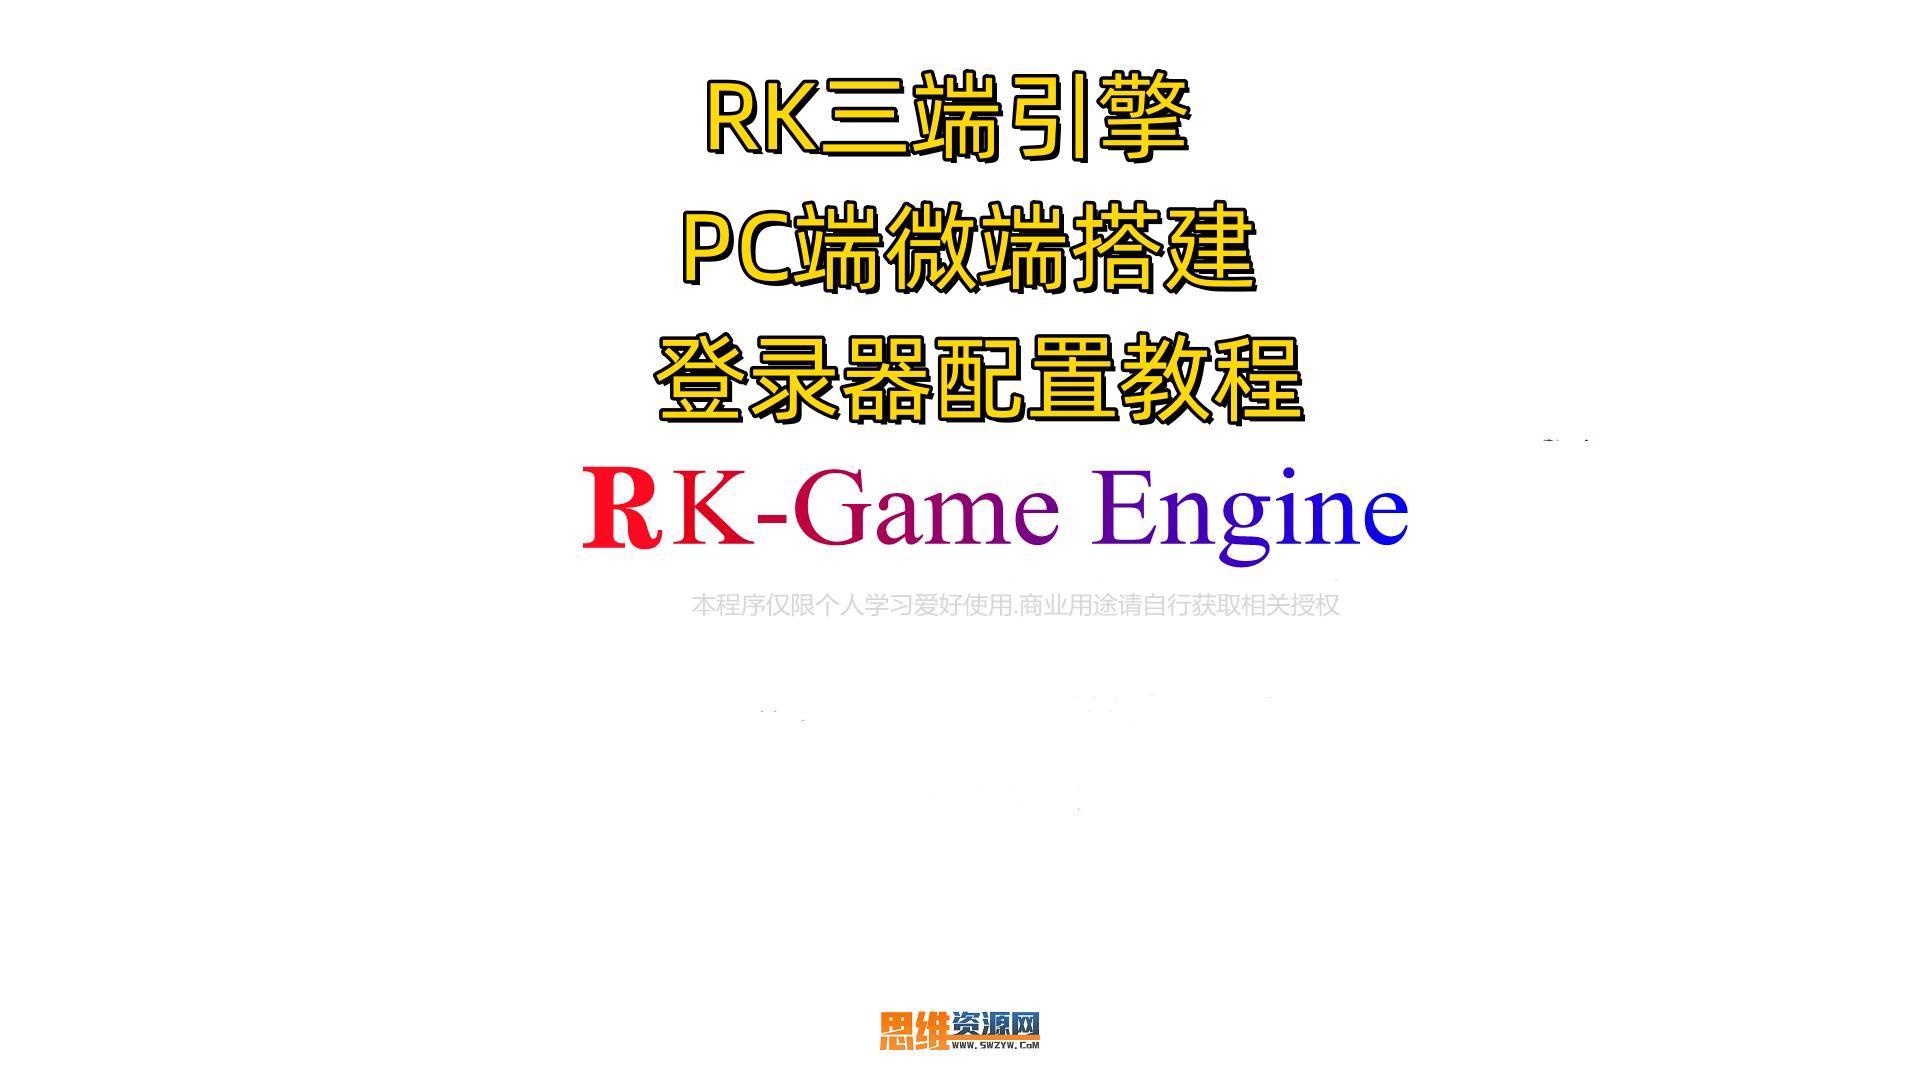 RK三端传奇引擎PC端-微端搭建及登录器配置器的搭建教程-视频教程-本教程出自于思维资源网